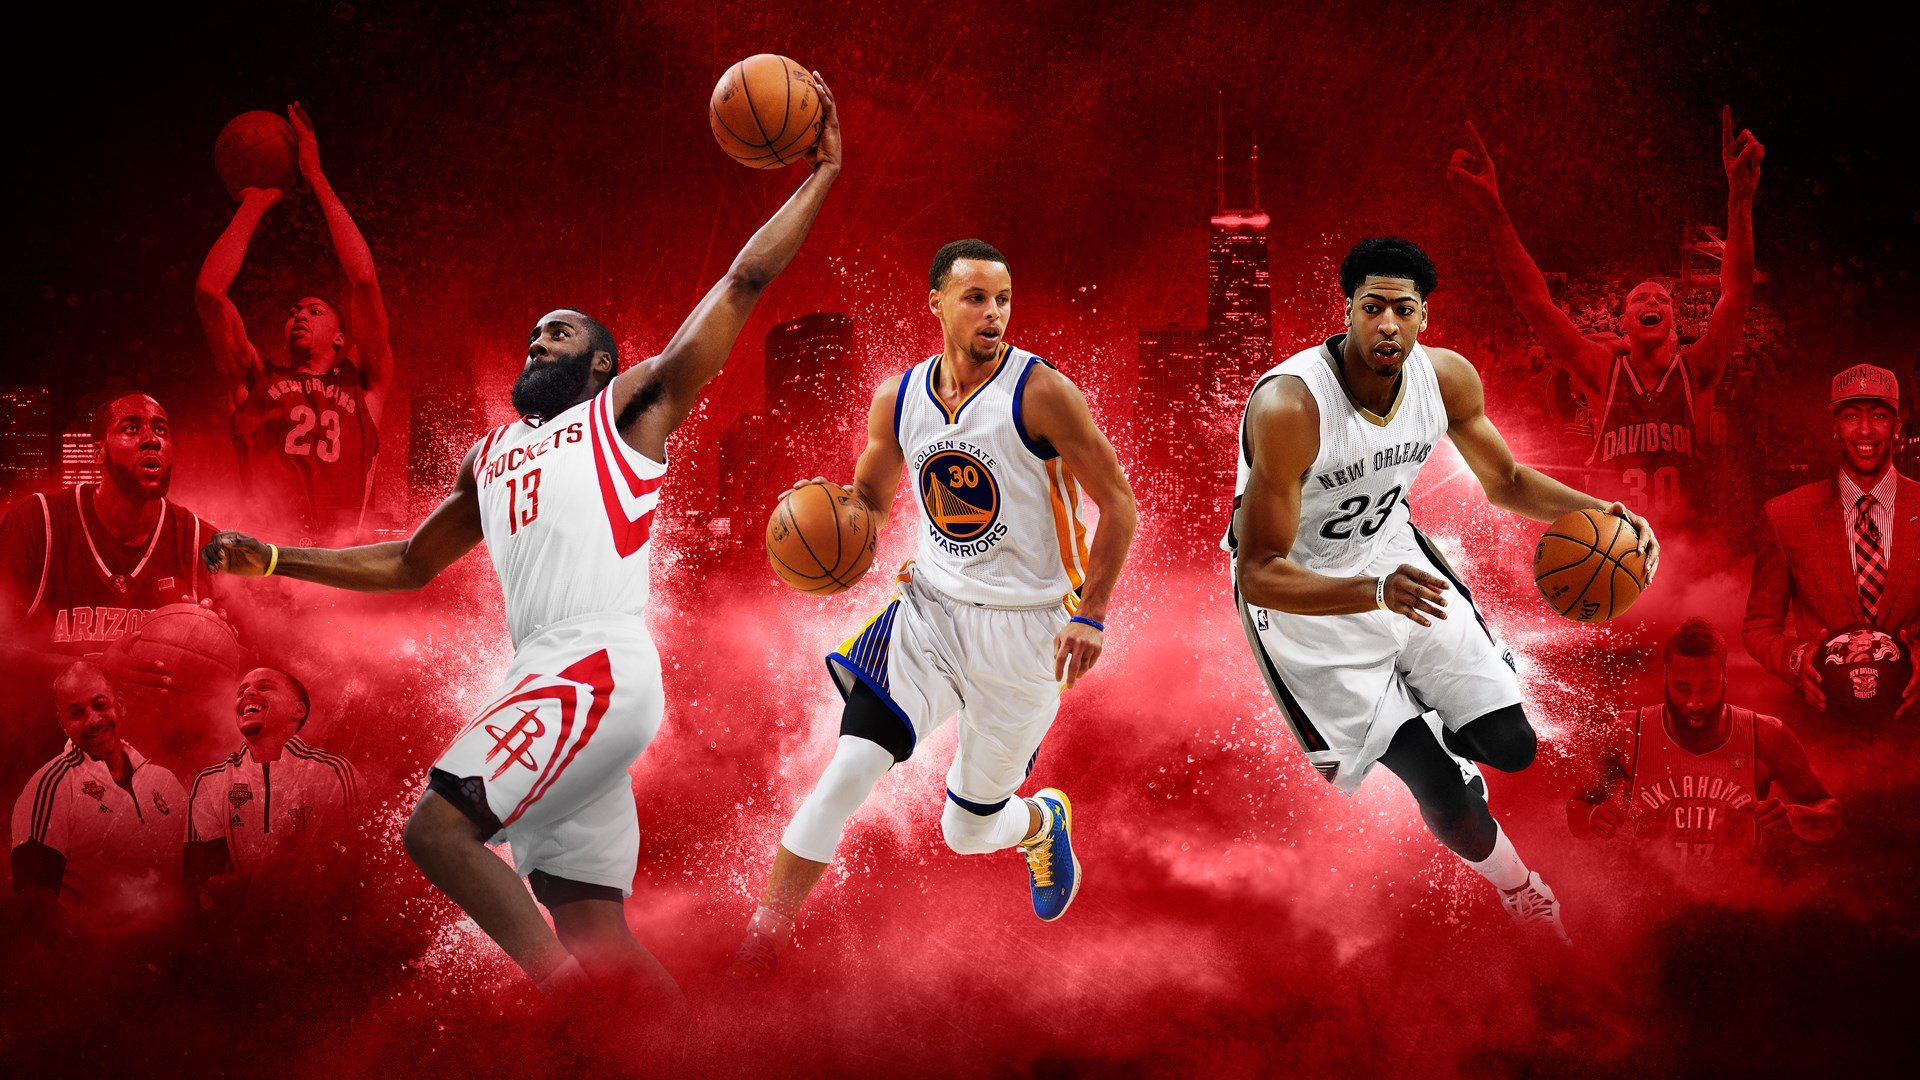 NBA 2K16 cover image